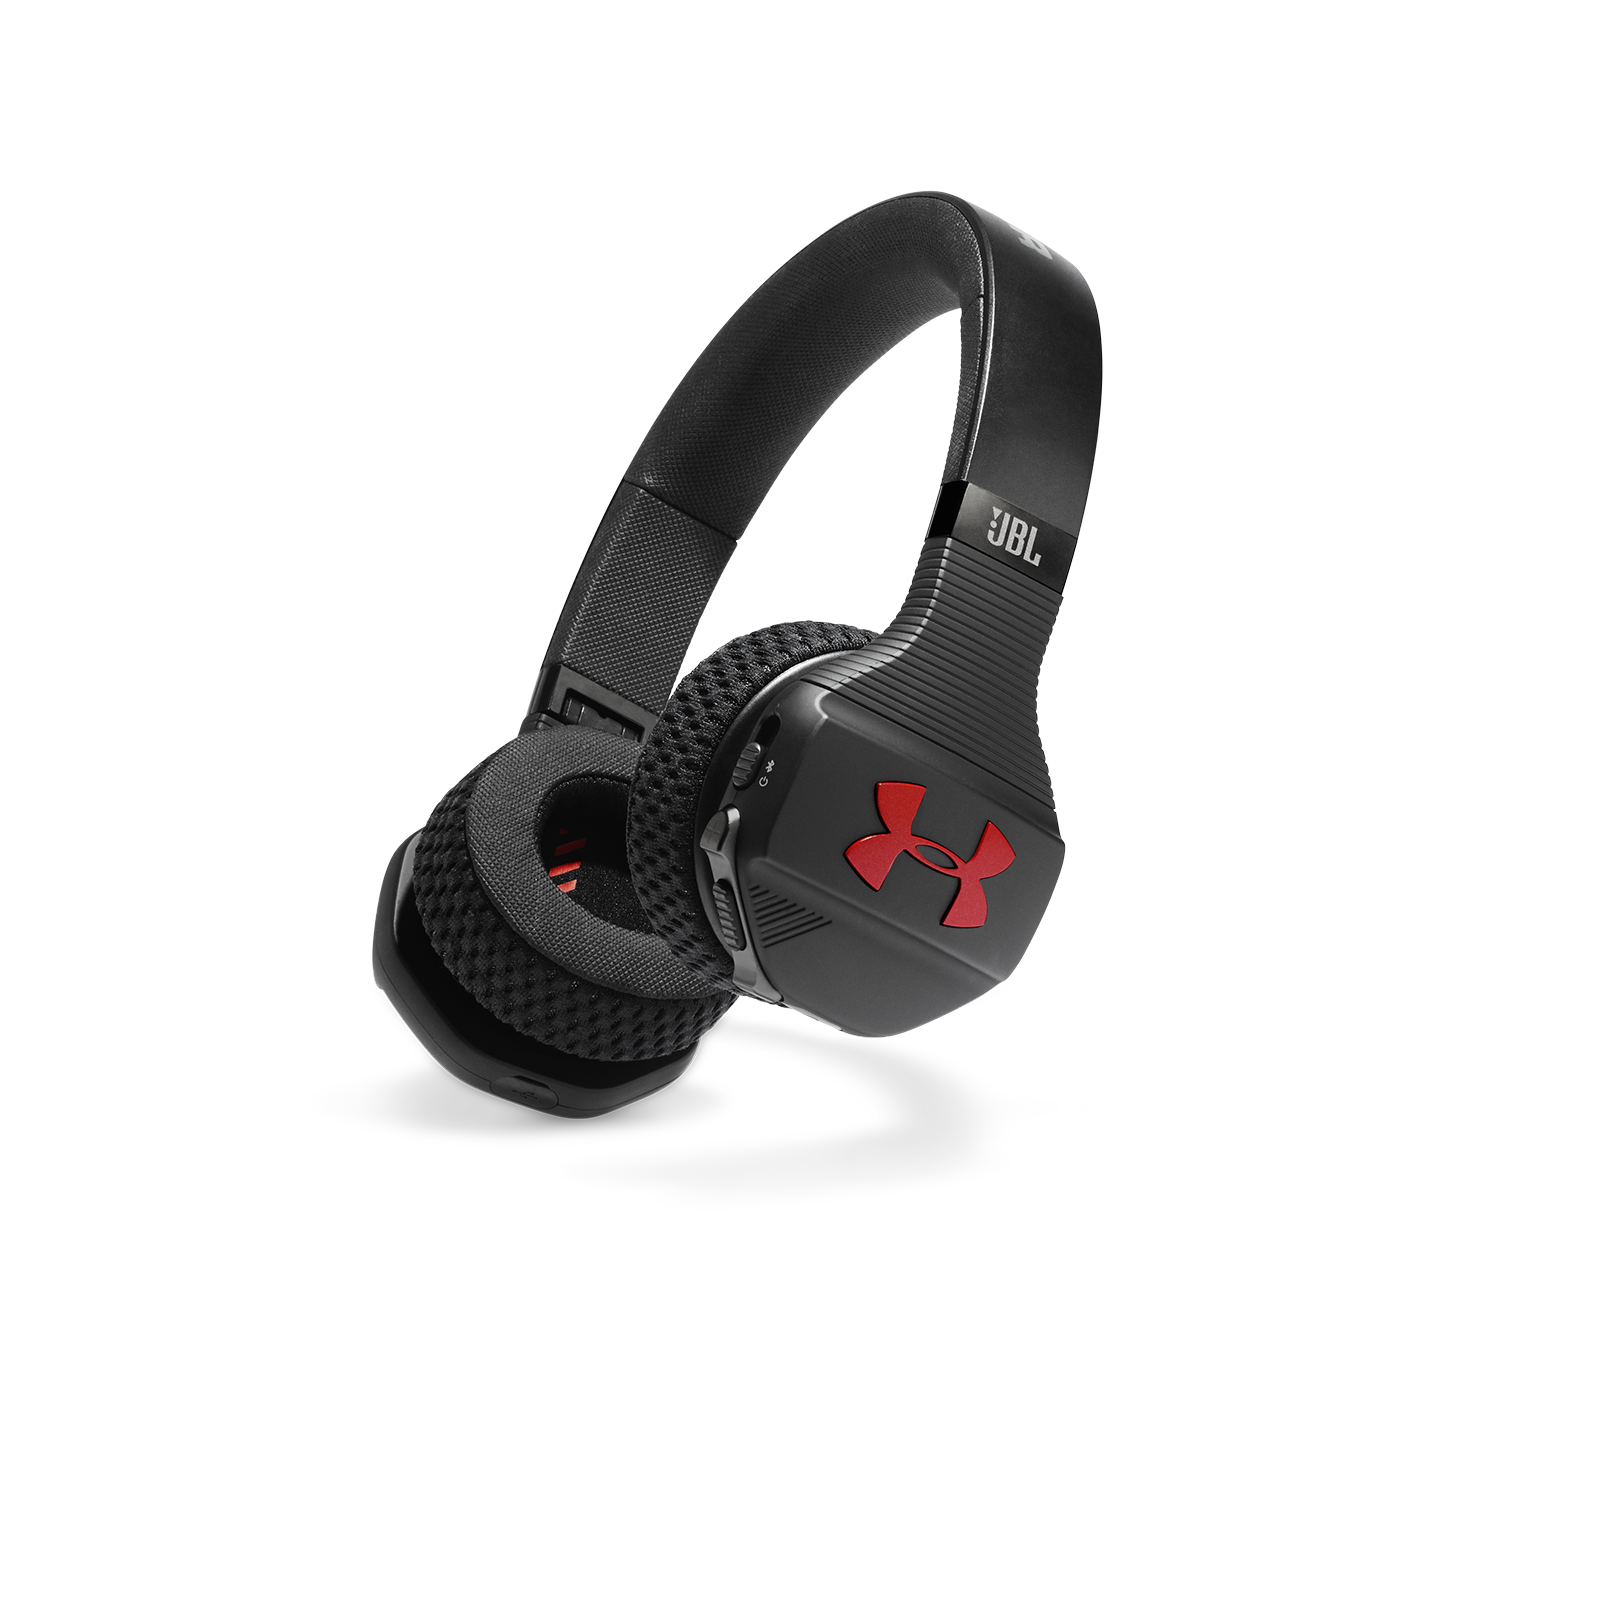 UA Sport Wireless Train – Engineered by JBL - Black / Red - Wireless on-ear headphone built for the gym - Hero